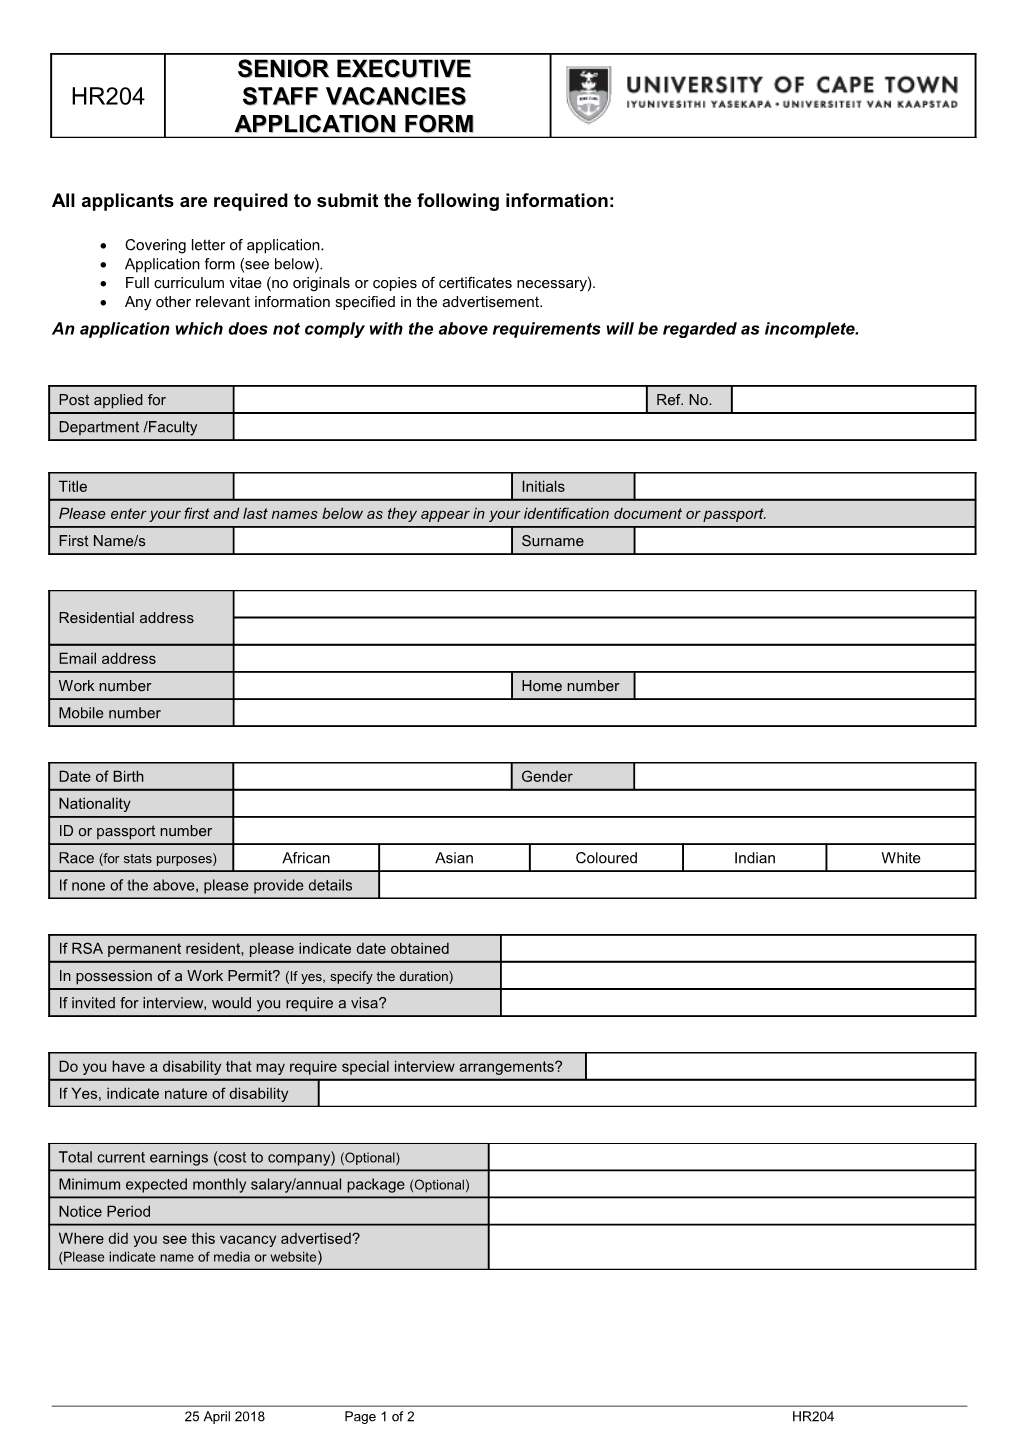 Senior Executive Staff Vacancies Application Form